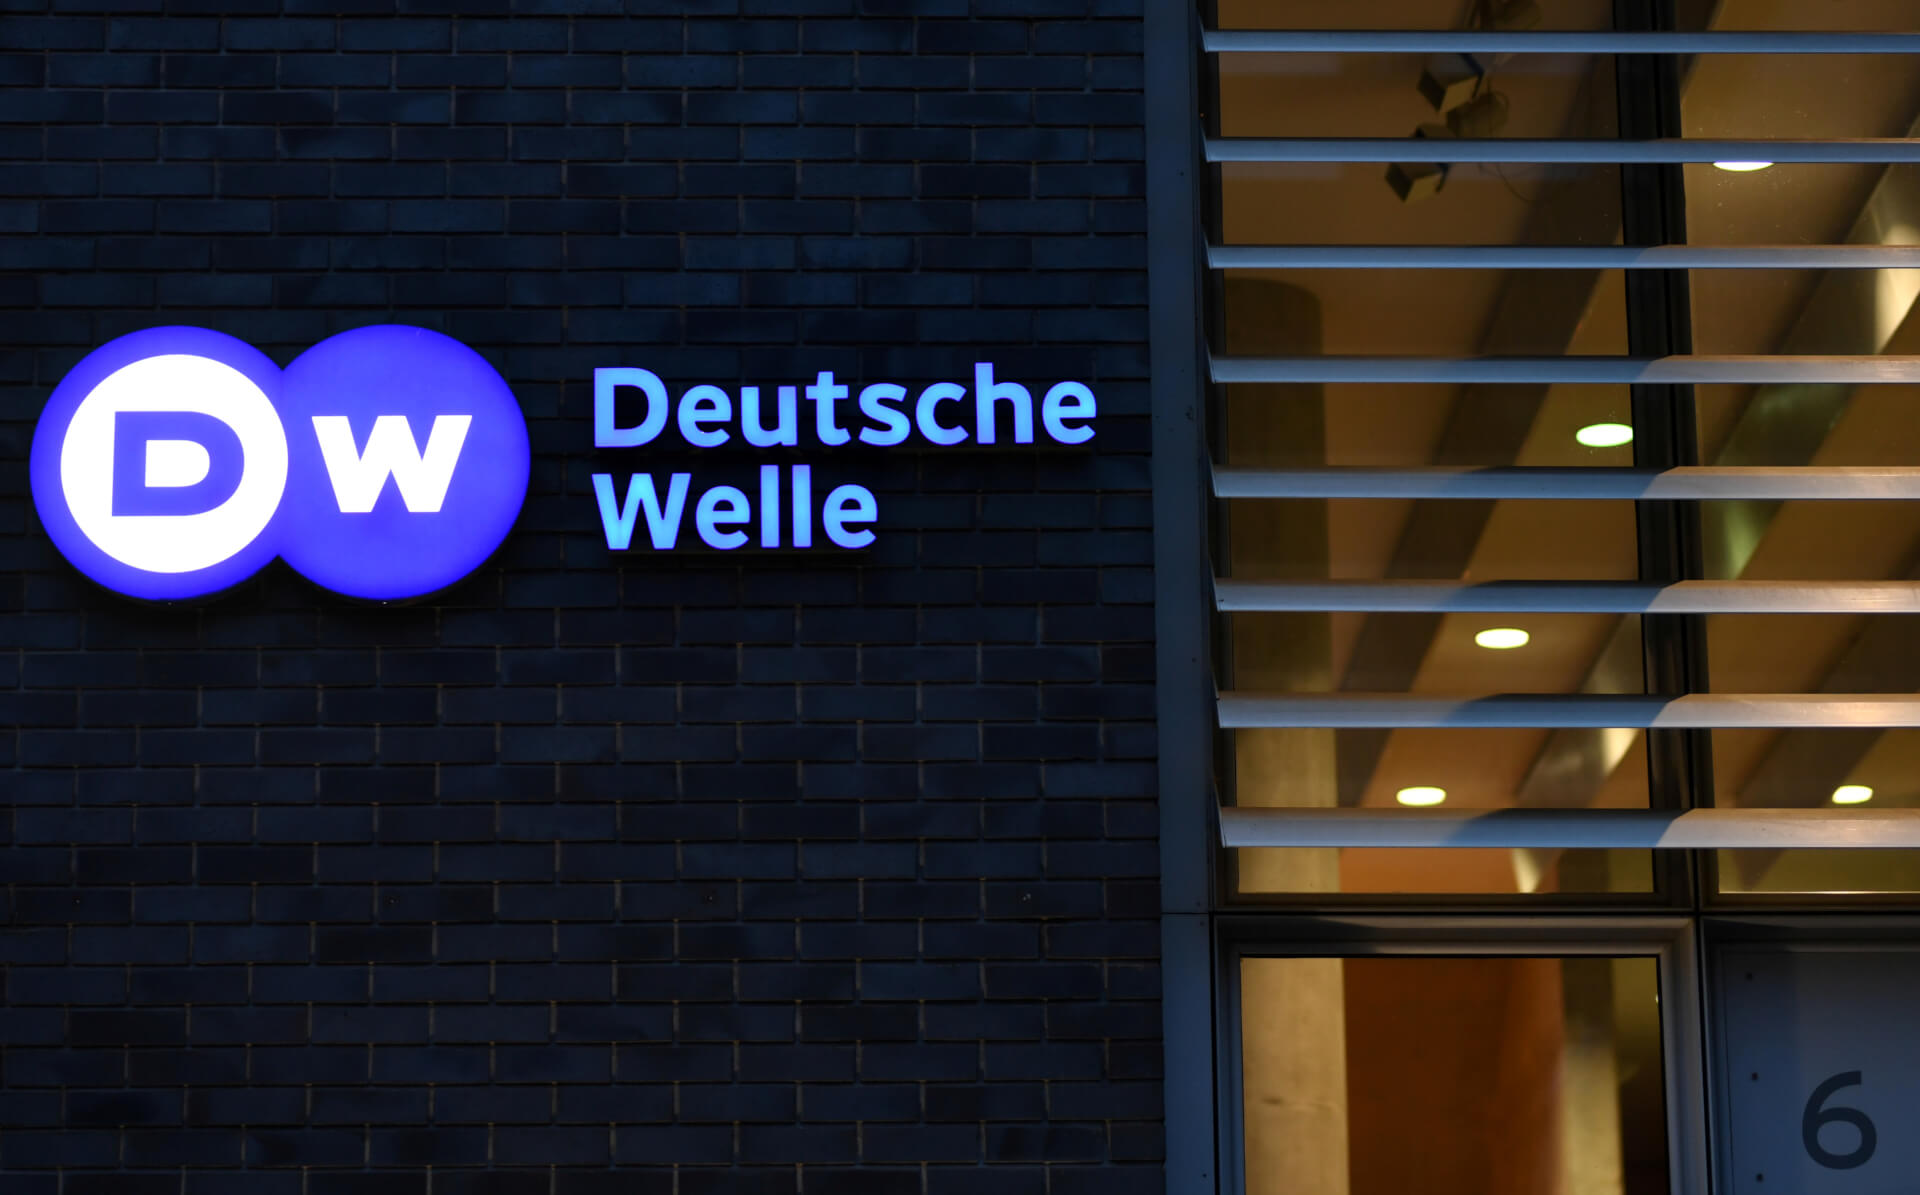 German Politicians & Organisations Support Deutsche Welle After Russian Ban